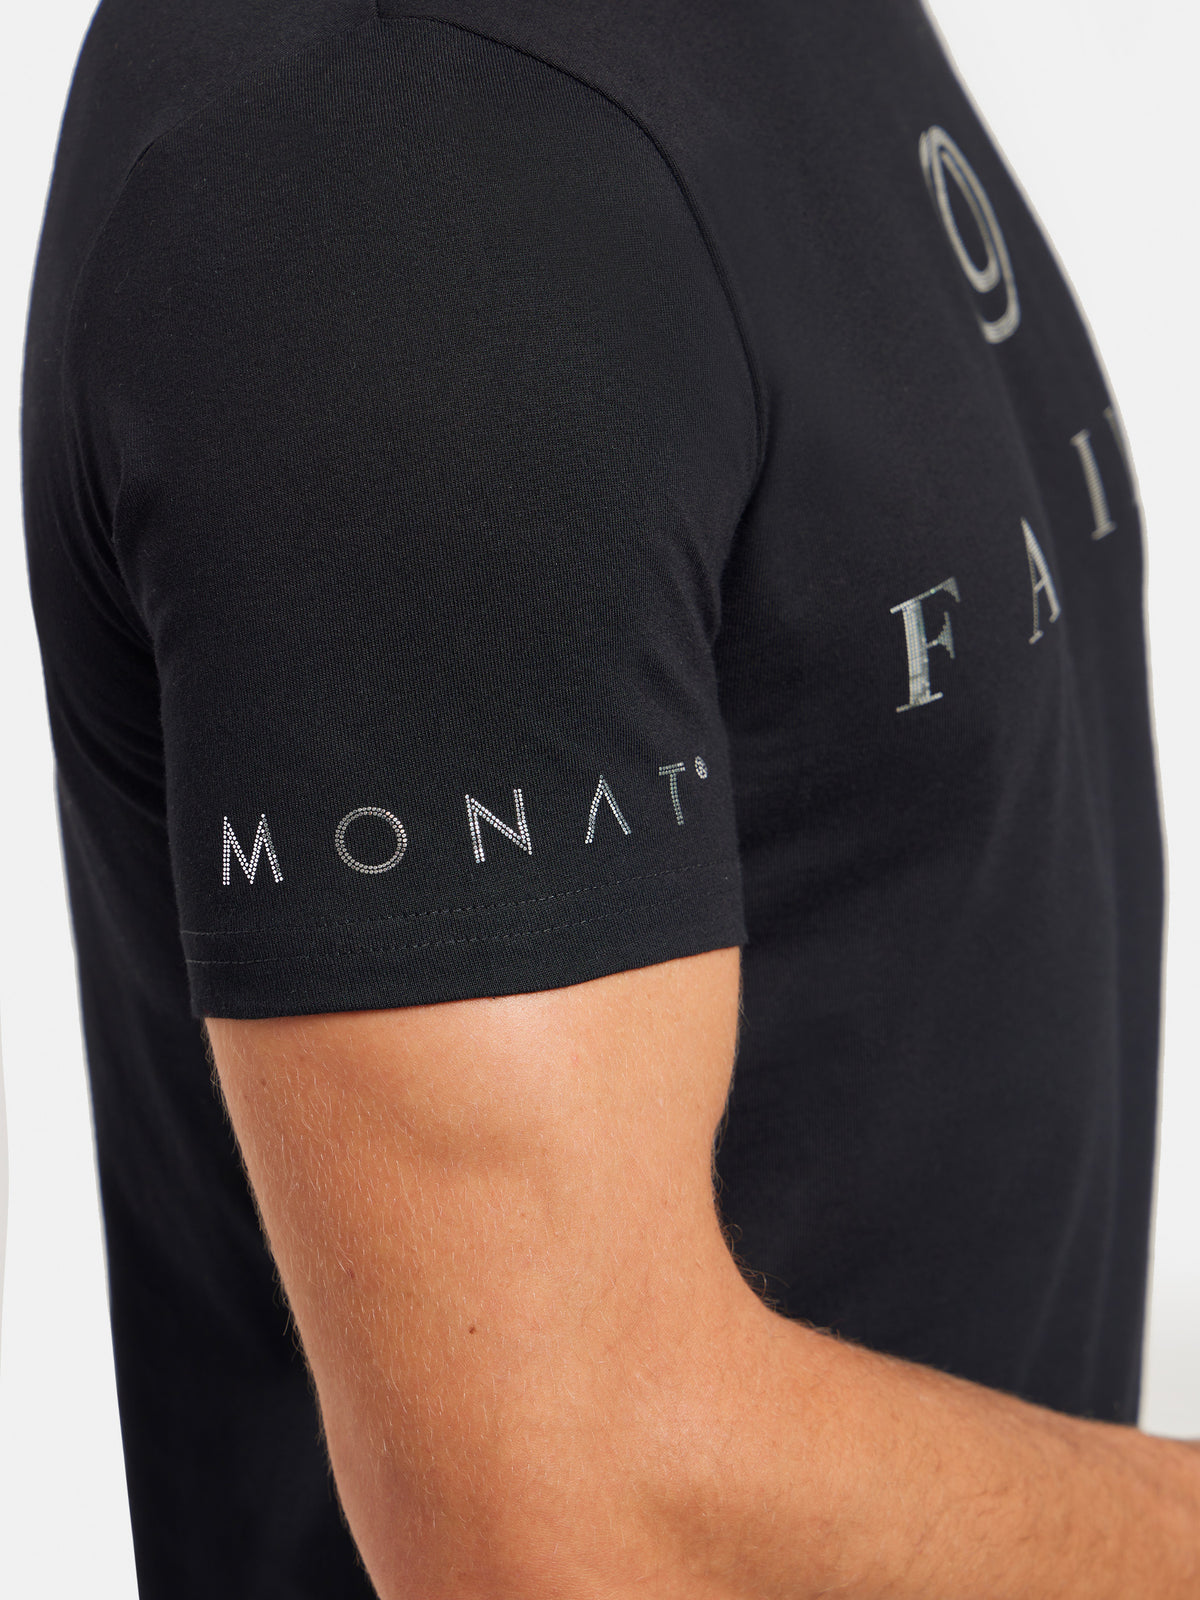 MONAT Family Tee Shirt - Black